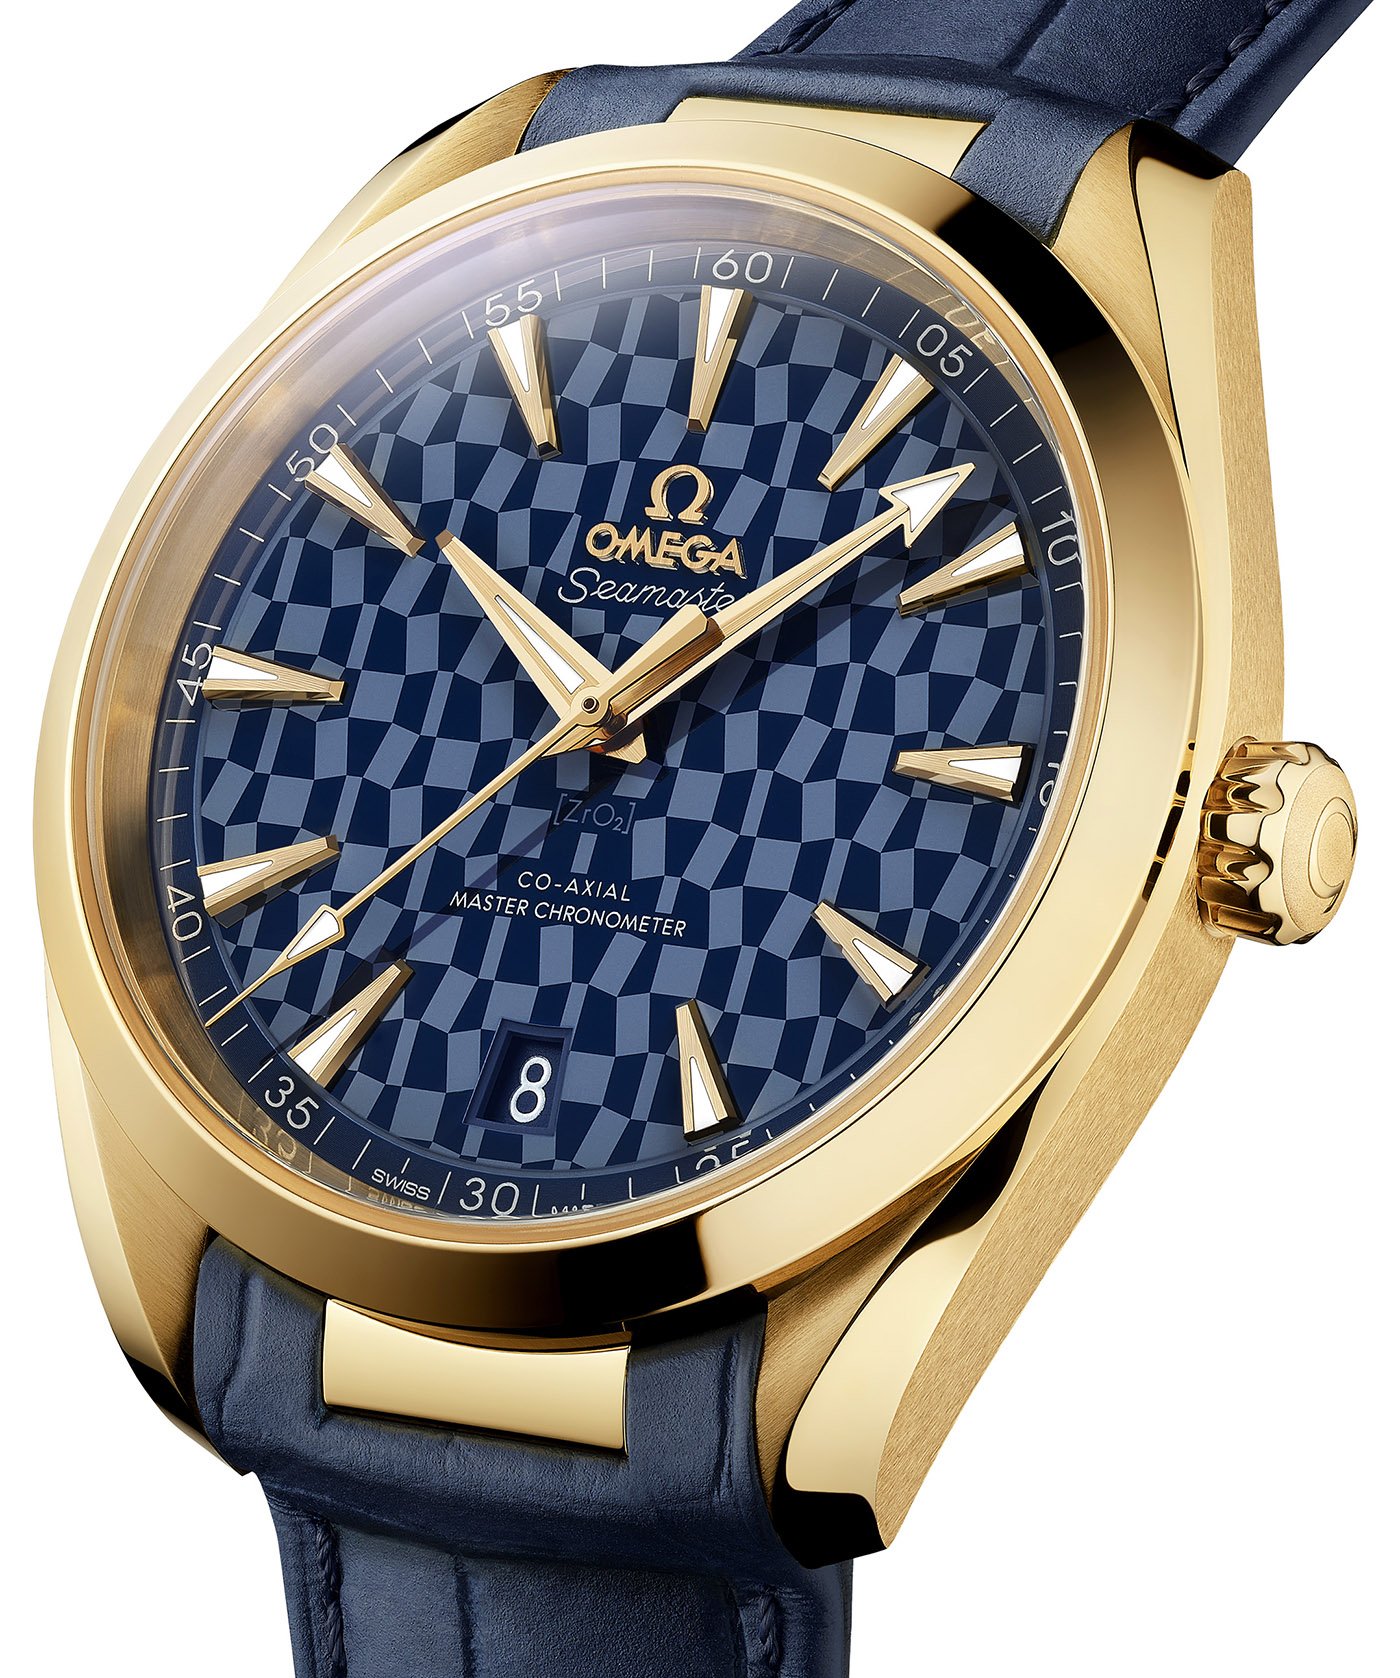 Omega представила золотые часы Seamaster Aqua Terra Tokyo 2020